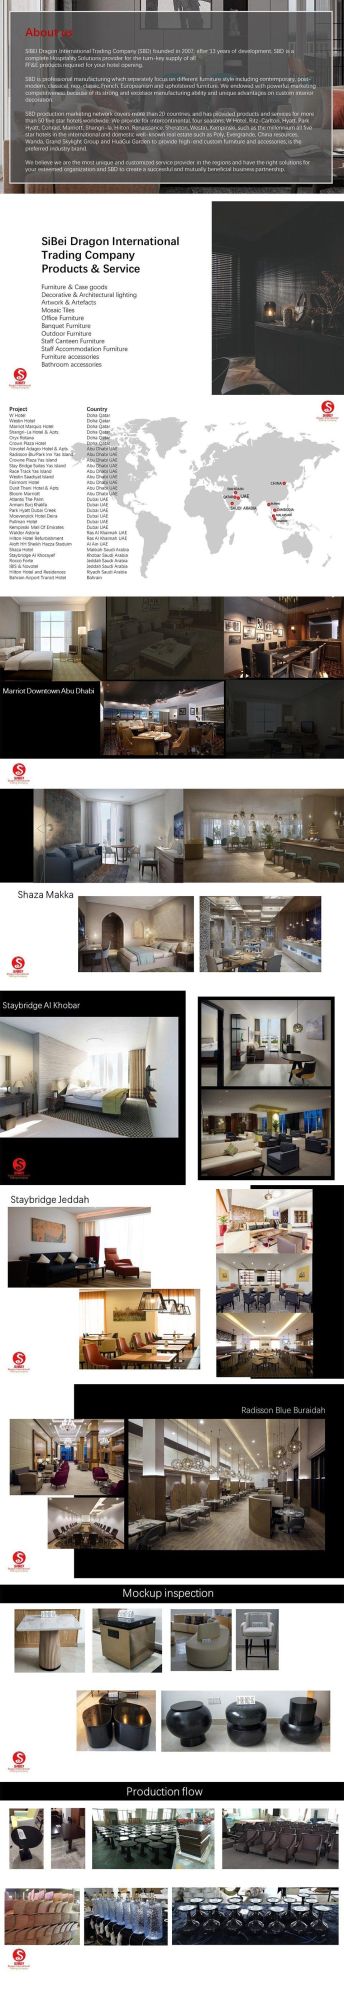 Five Star Hotel Lobby/ Room/ Custom Made/ Modern Sofa